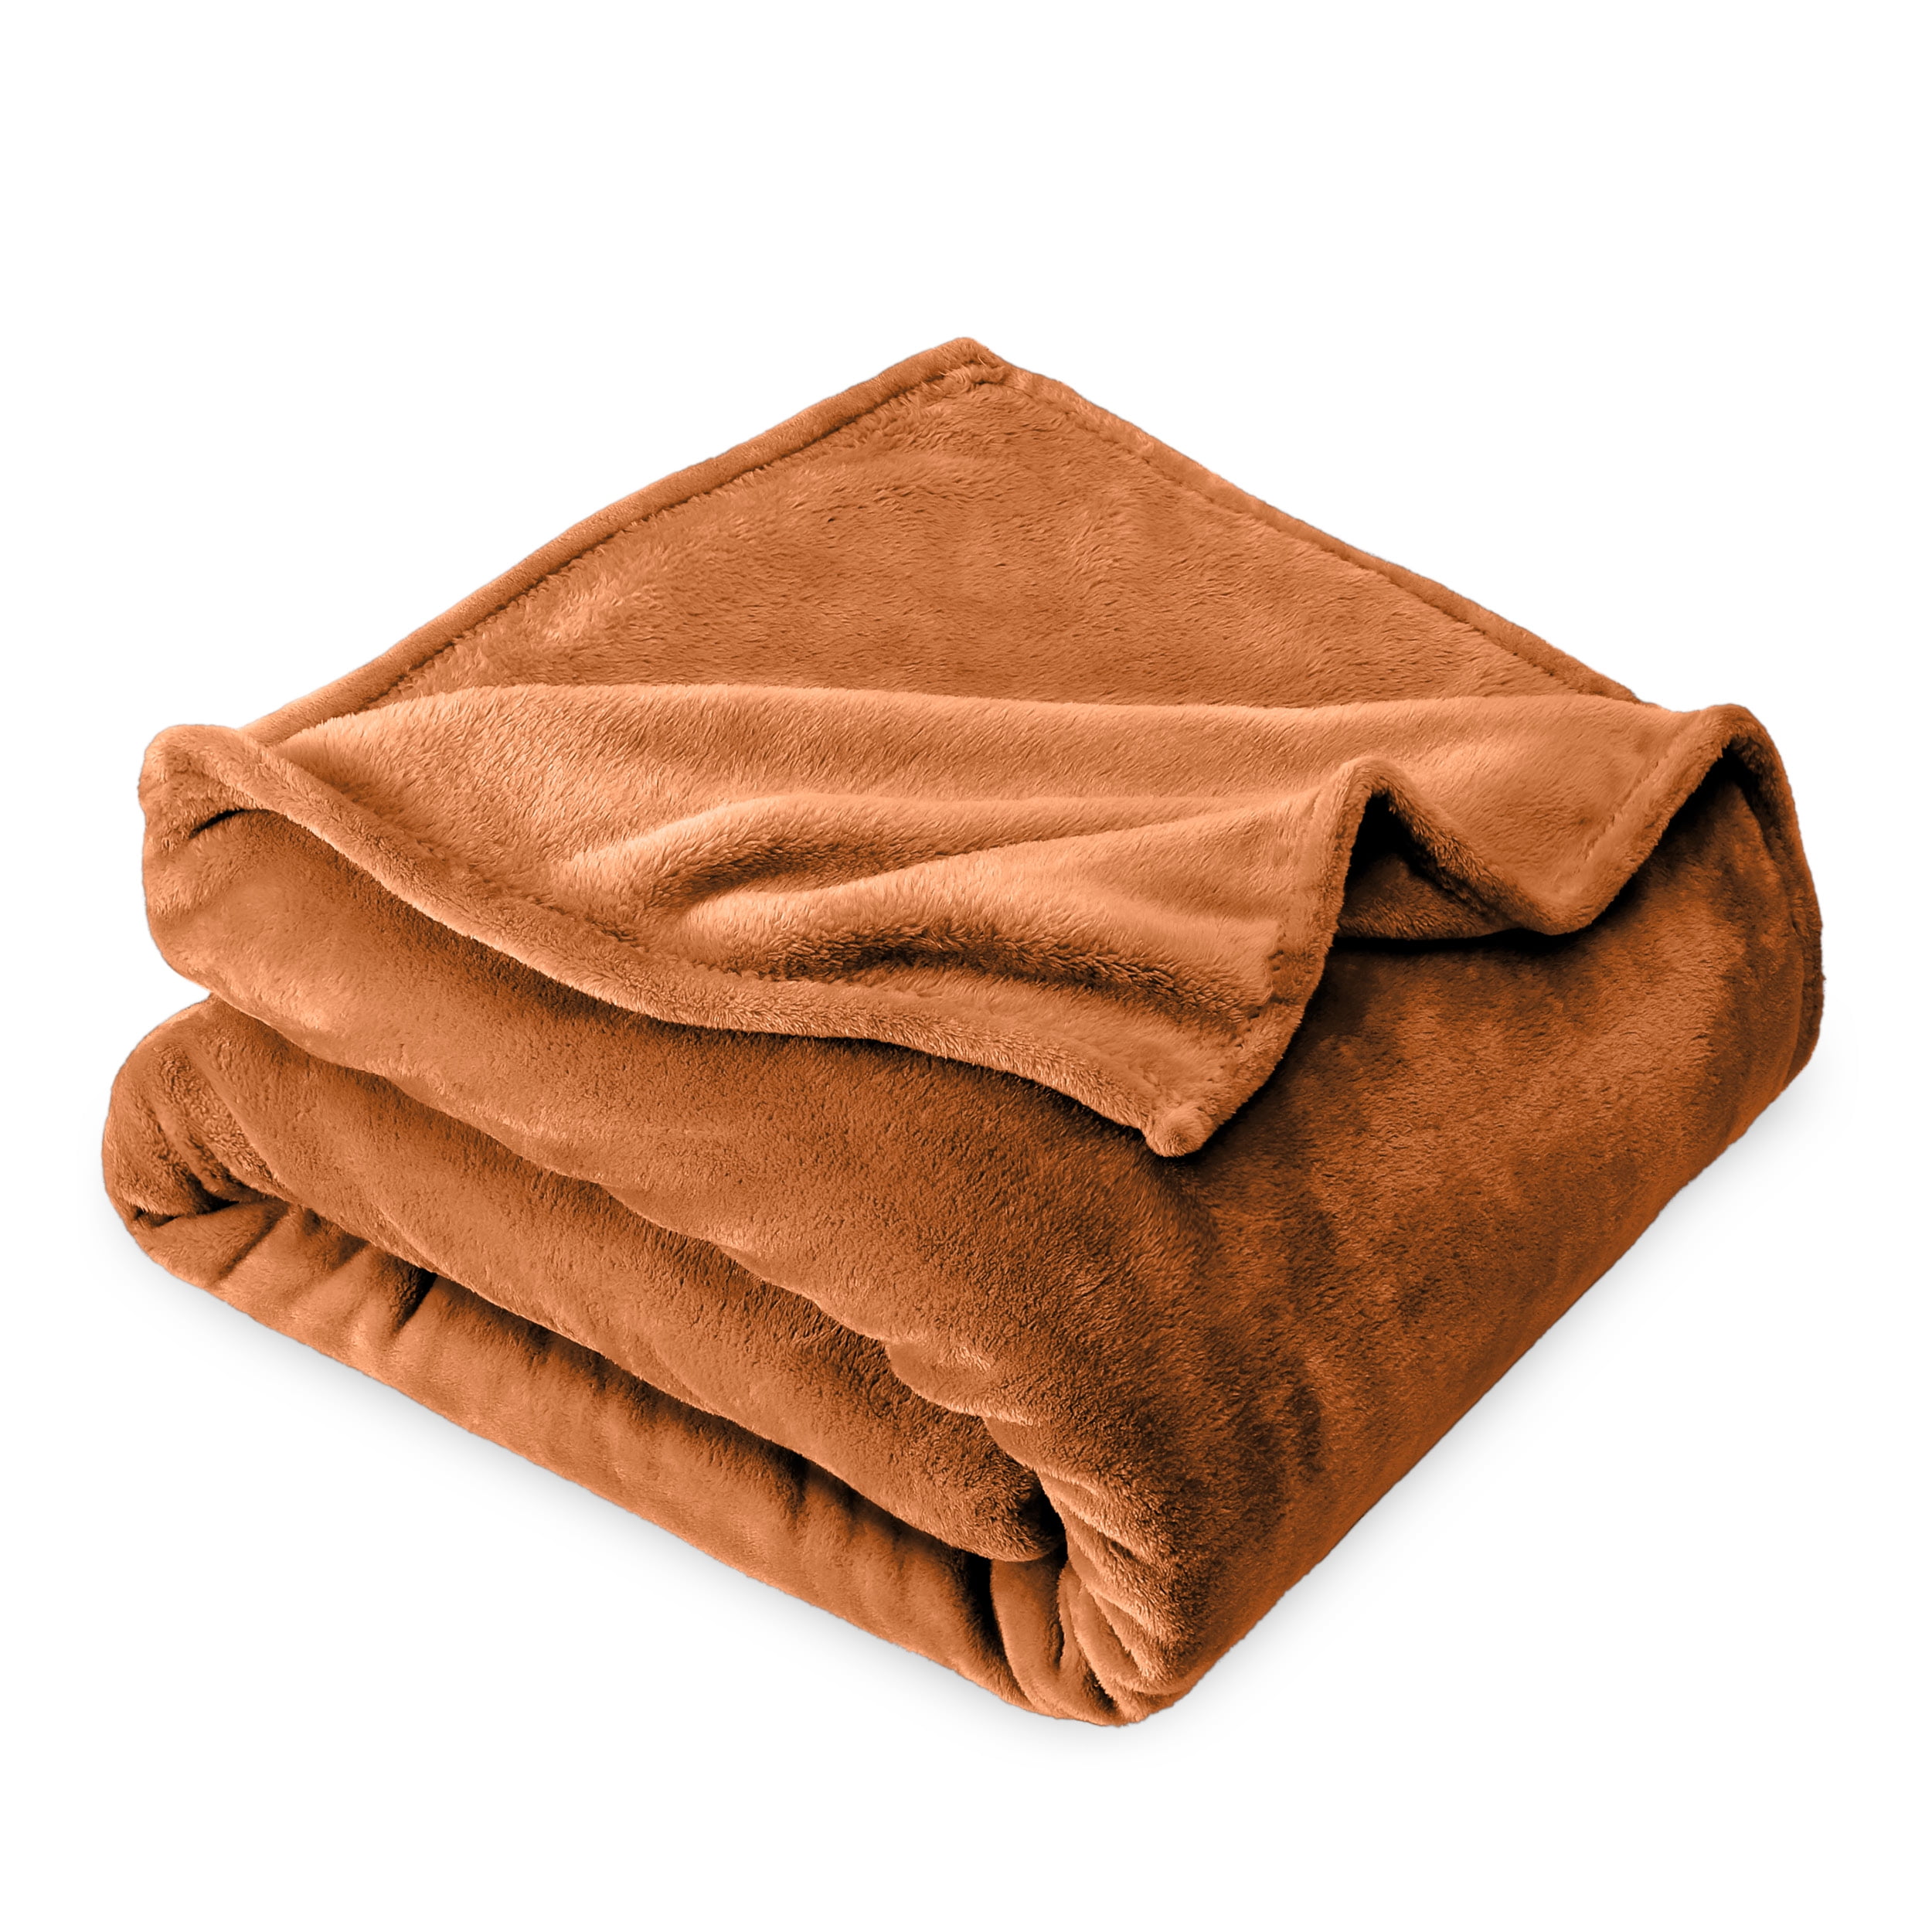 Bare Home Microplush Fleece Blanket - 300 GSM - Fuzzy Microfleece - Soft &  Plush - Throw/Travel, Sienna